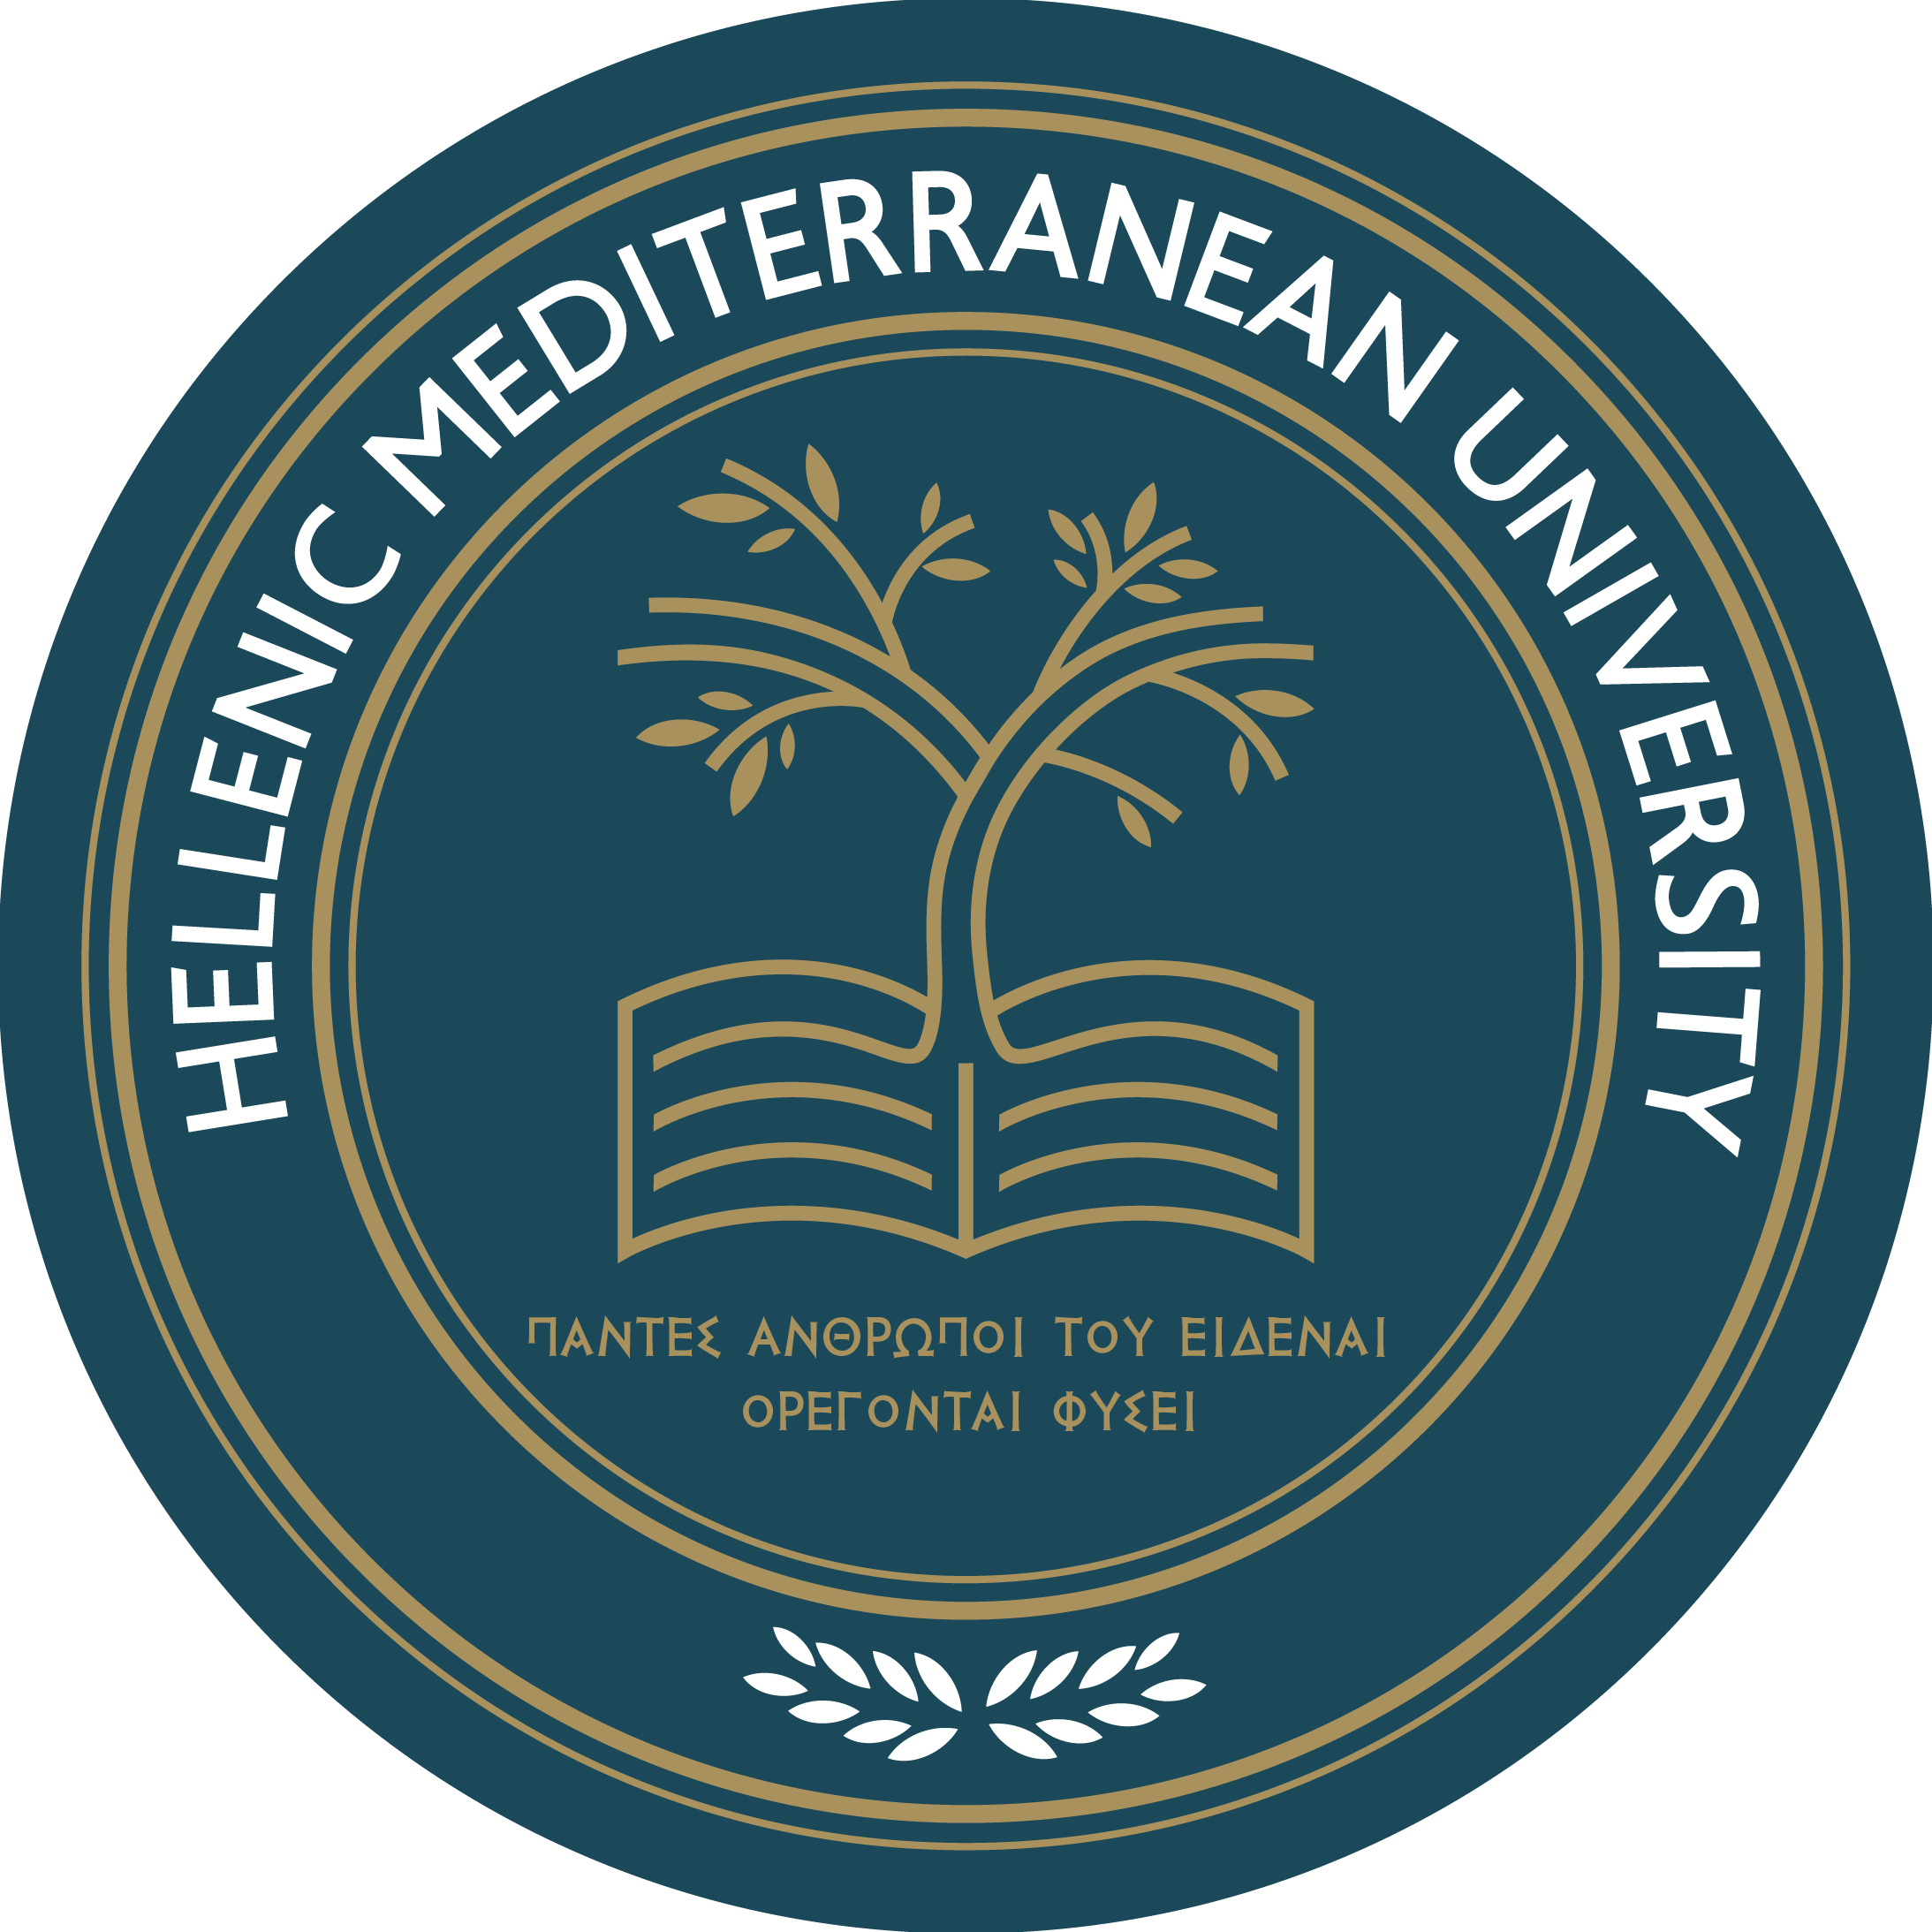 HMU | Hellenic Mediterranean University